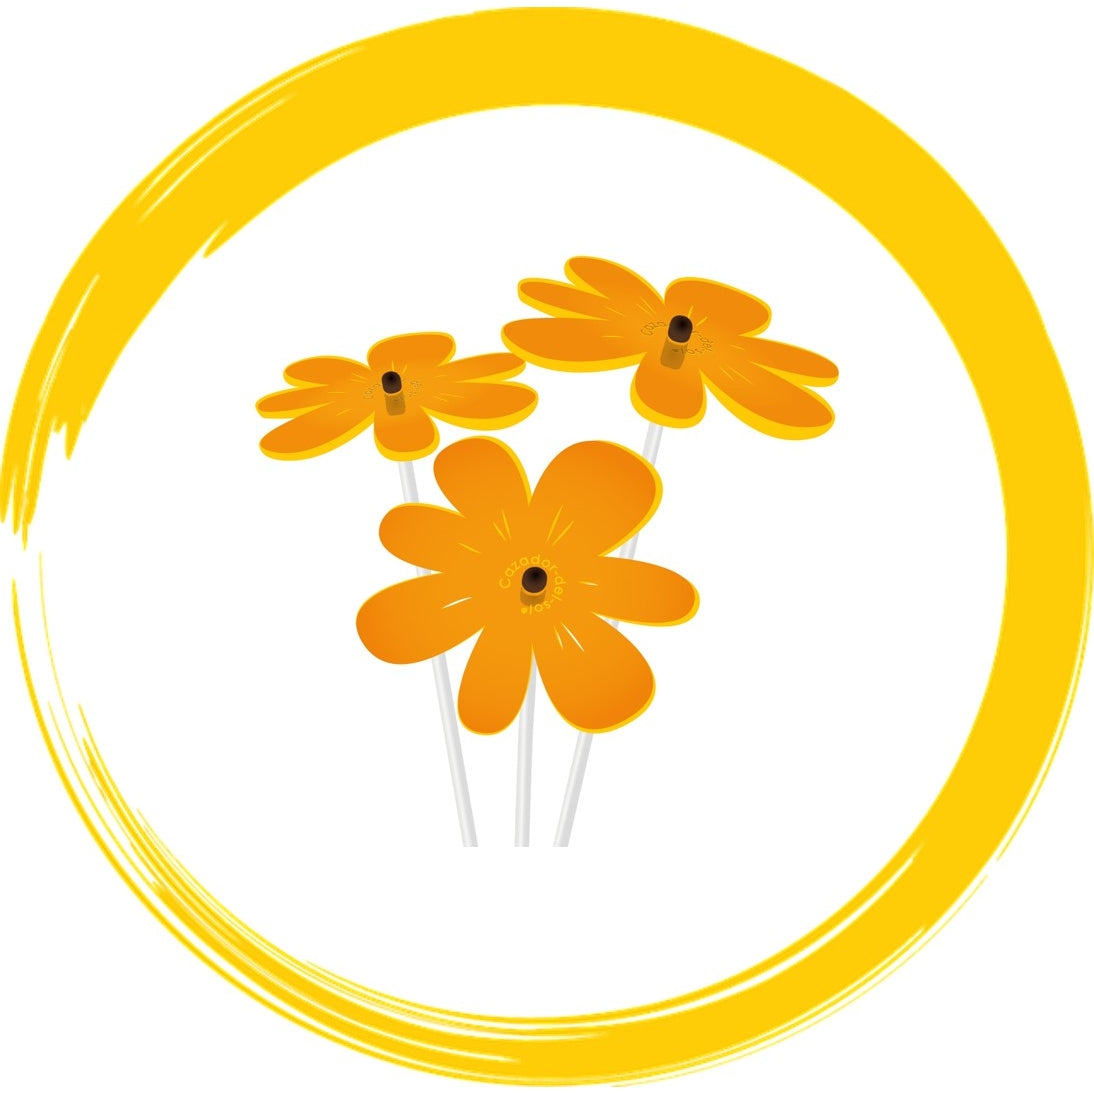 Cazador-del-sol Suncatchers Bouquet of Sunflowers | Nea | Small flower shaped